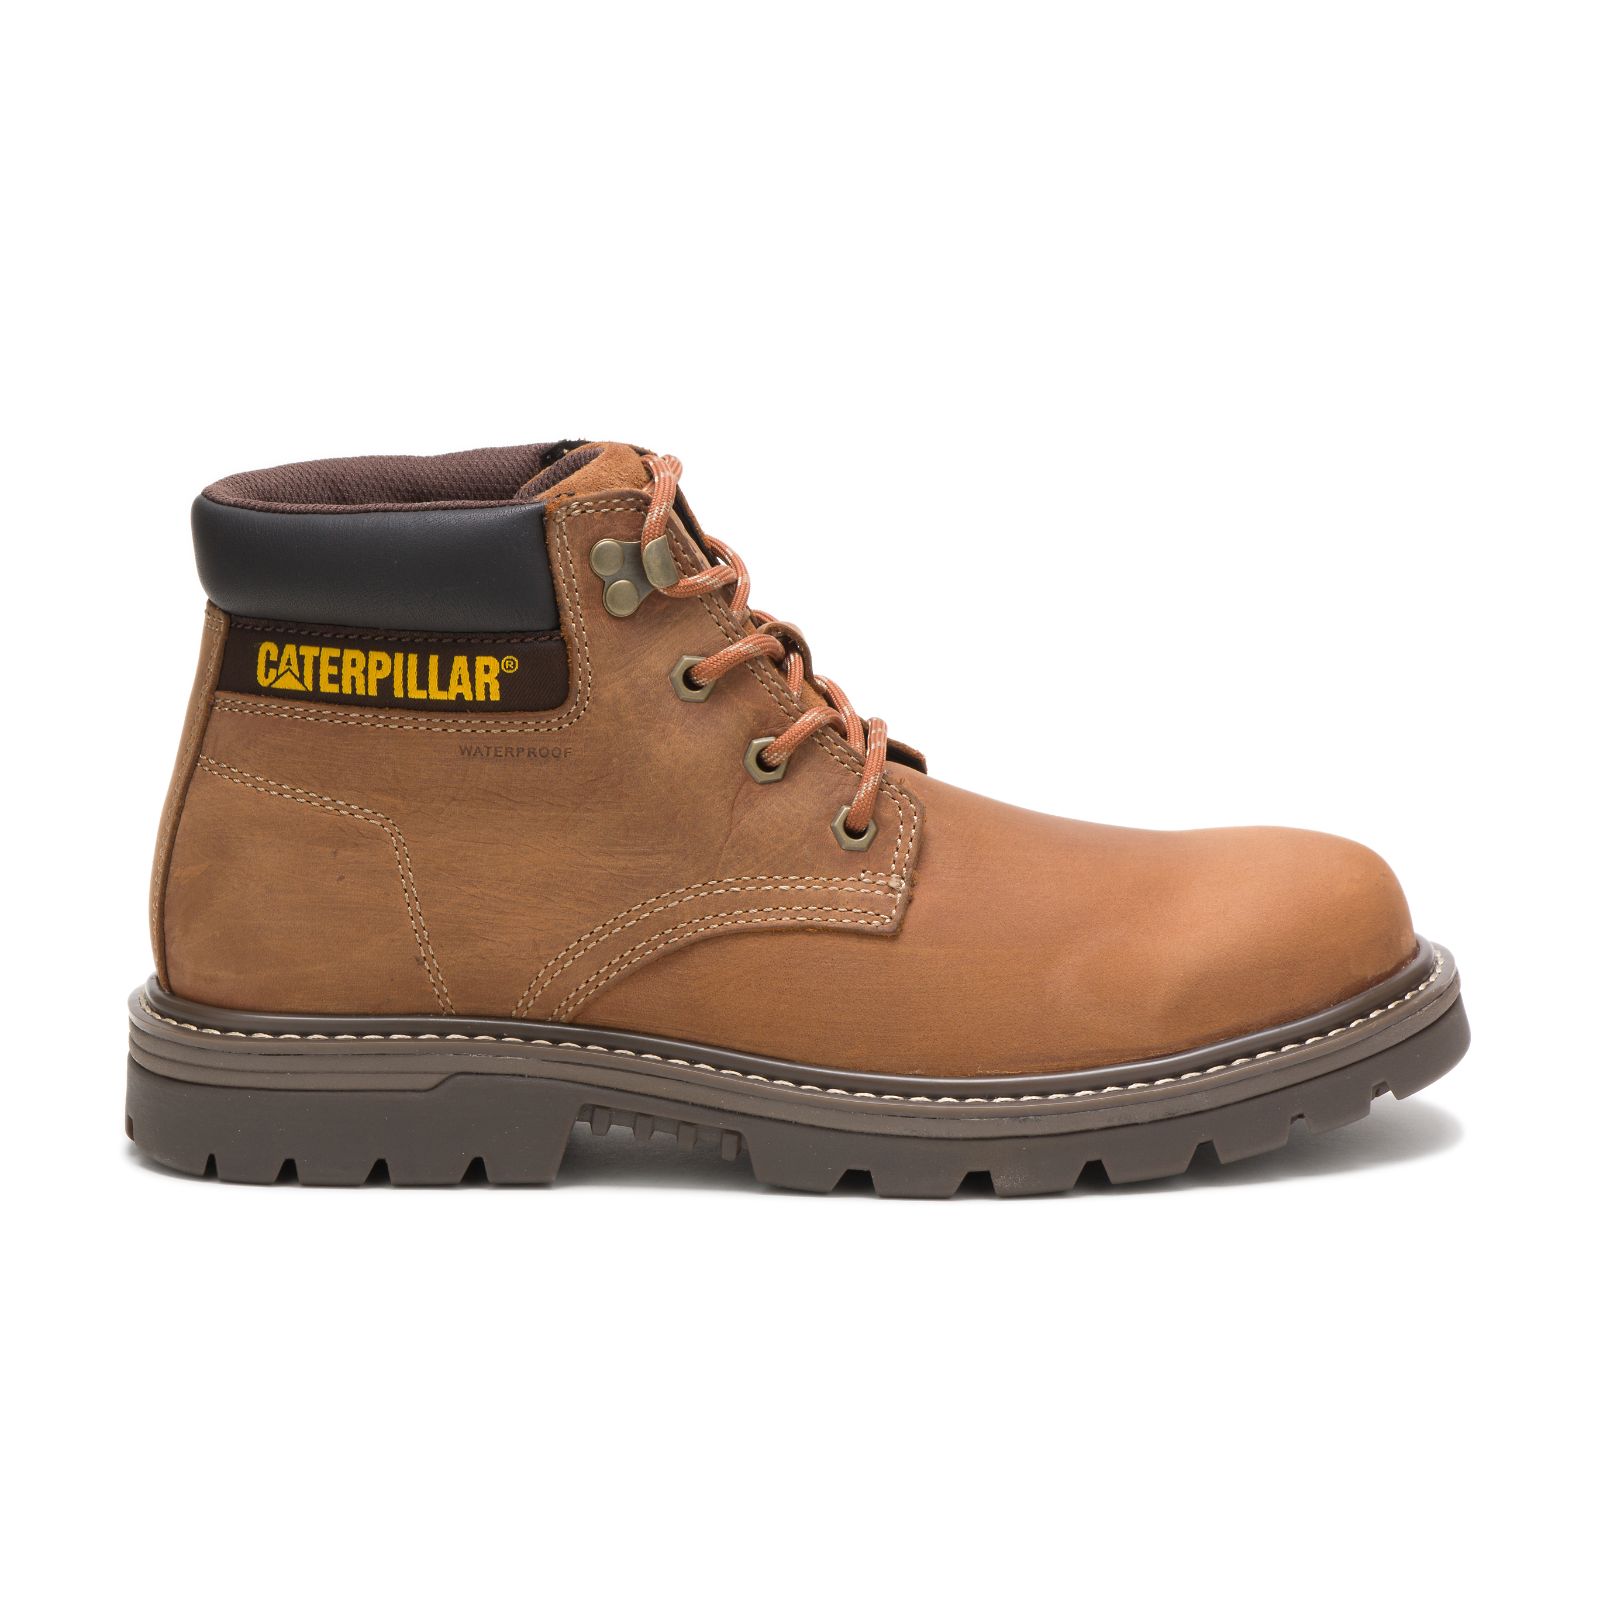 Caterpillar Boots Sale - Caterpillar Outbase Waterproof Mens Work Boots Brown (871034-XBL)